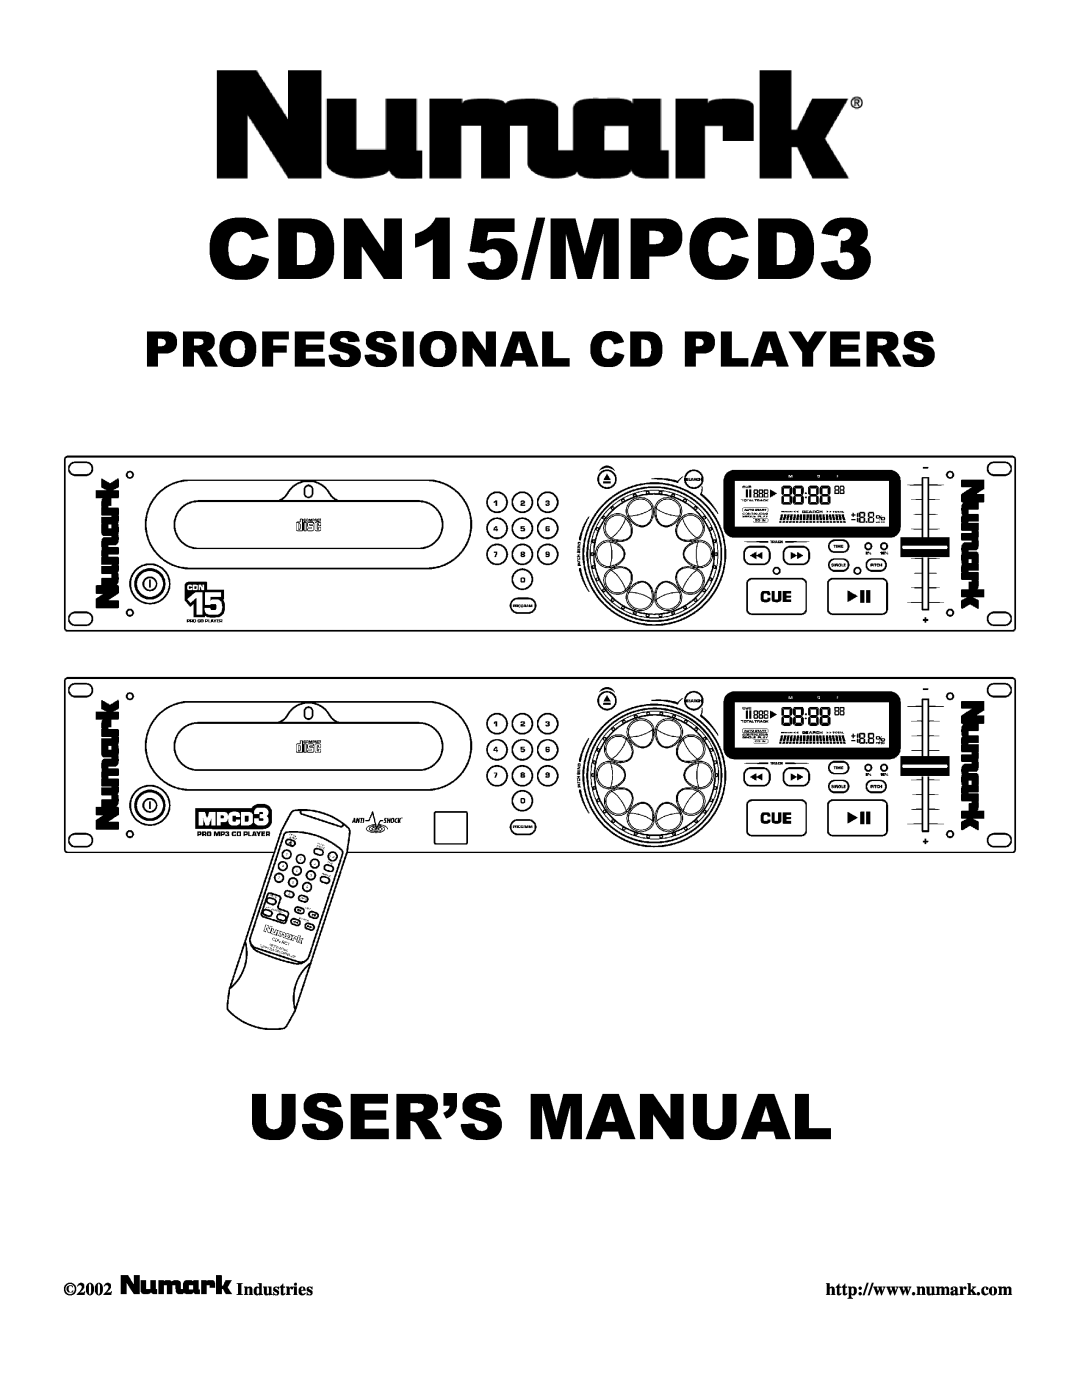 Numark Industries user manual CDN15/MPCD3, Professional Cd Players, Industries, 2002 